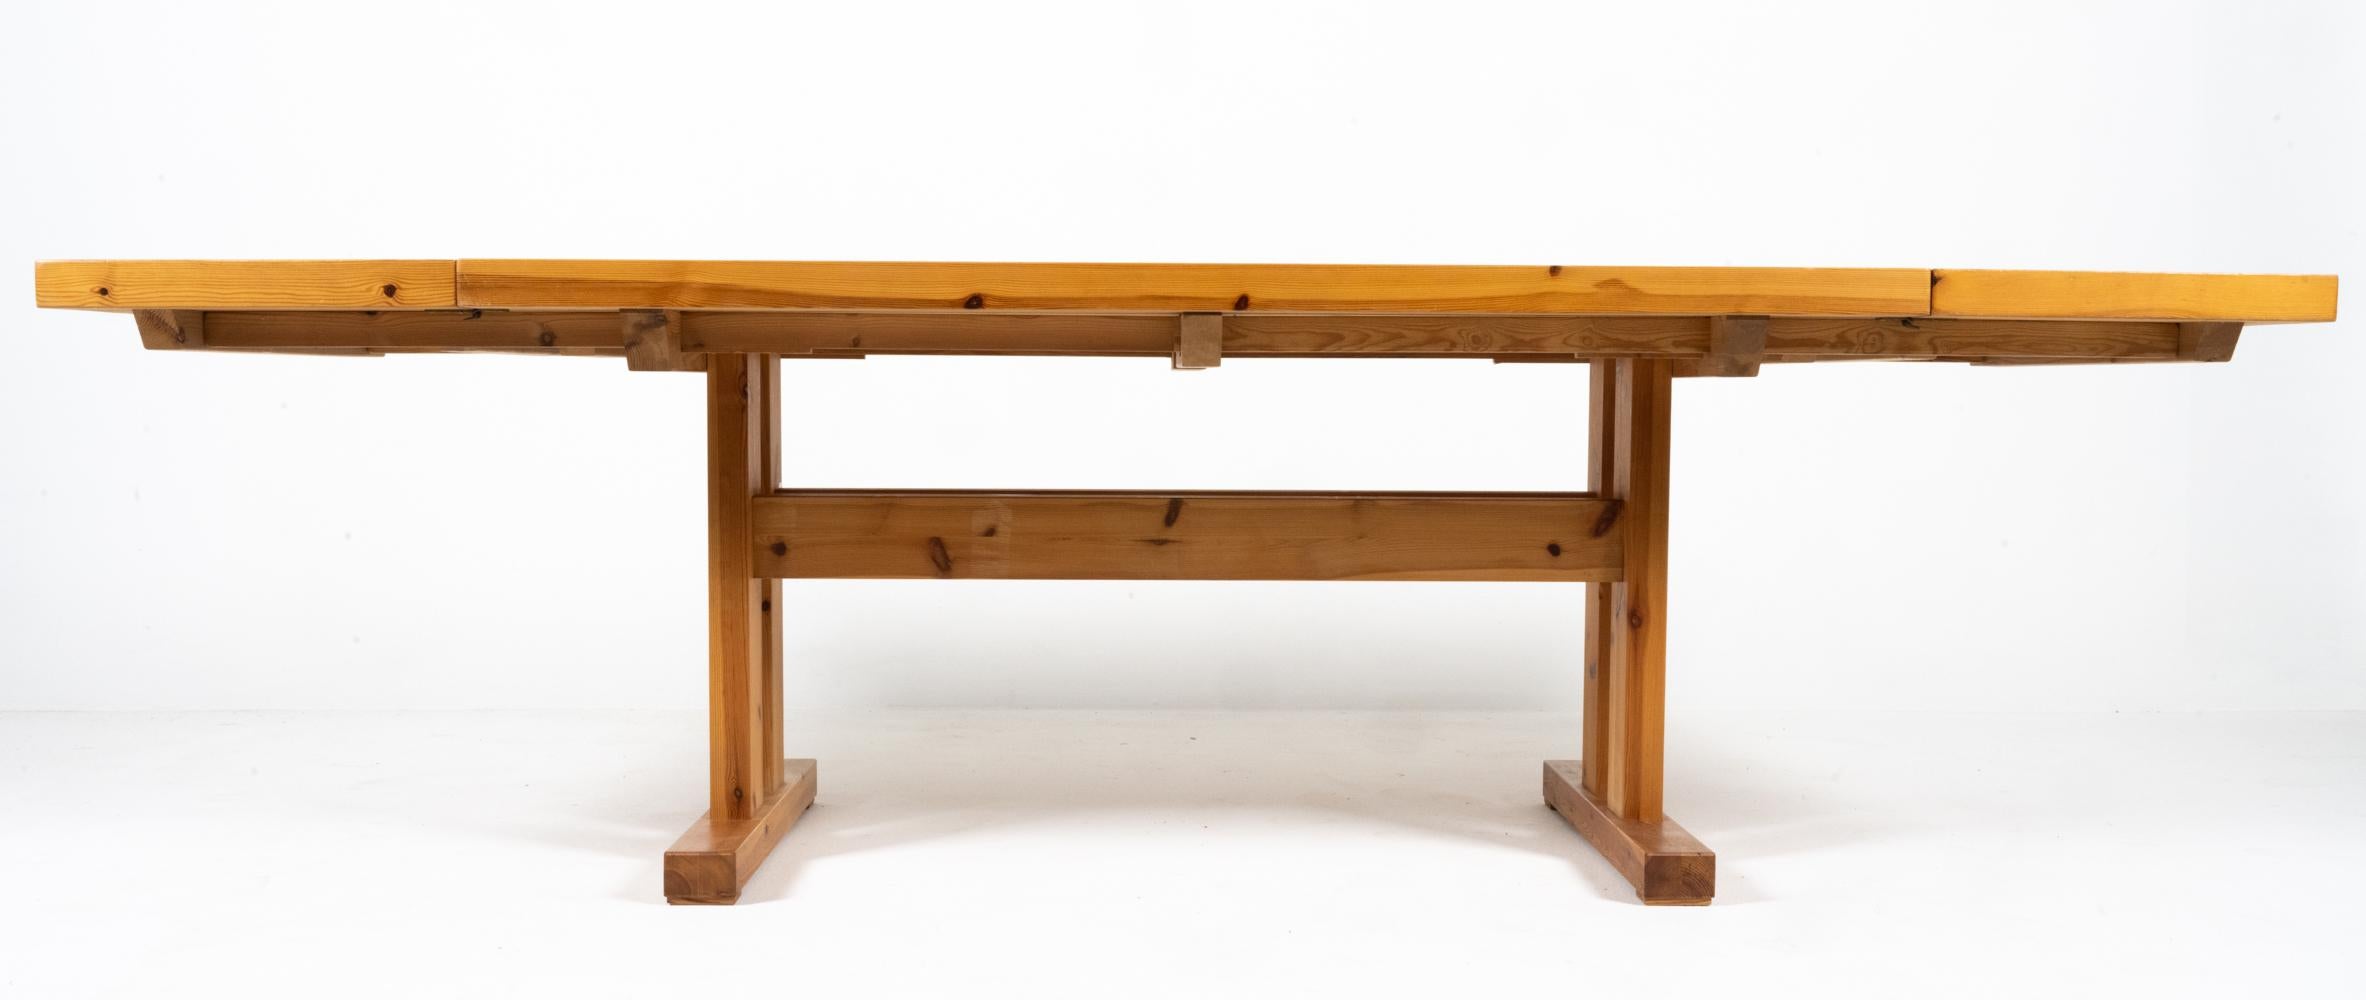 Danish Jens Lyngsoe-Style Pine Trestle Dining Table, c. 1980's For Sale 11